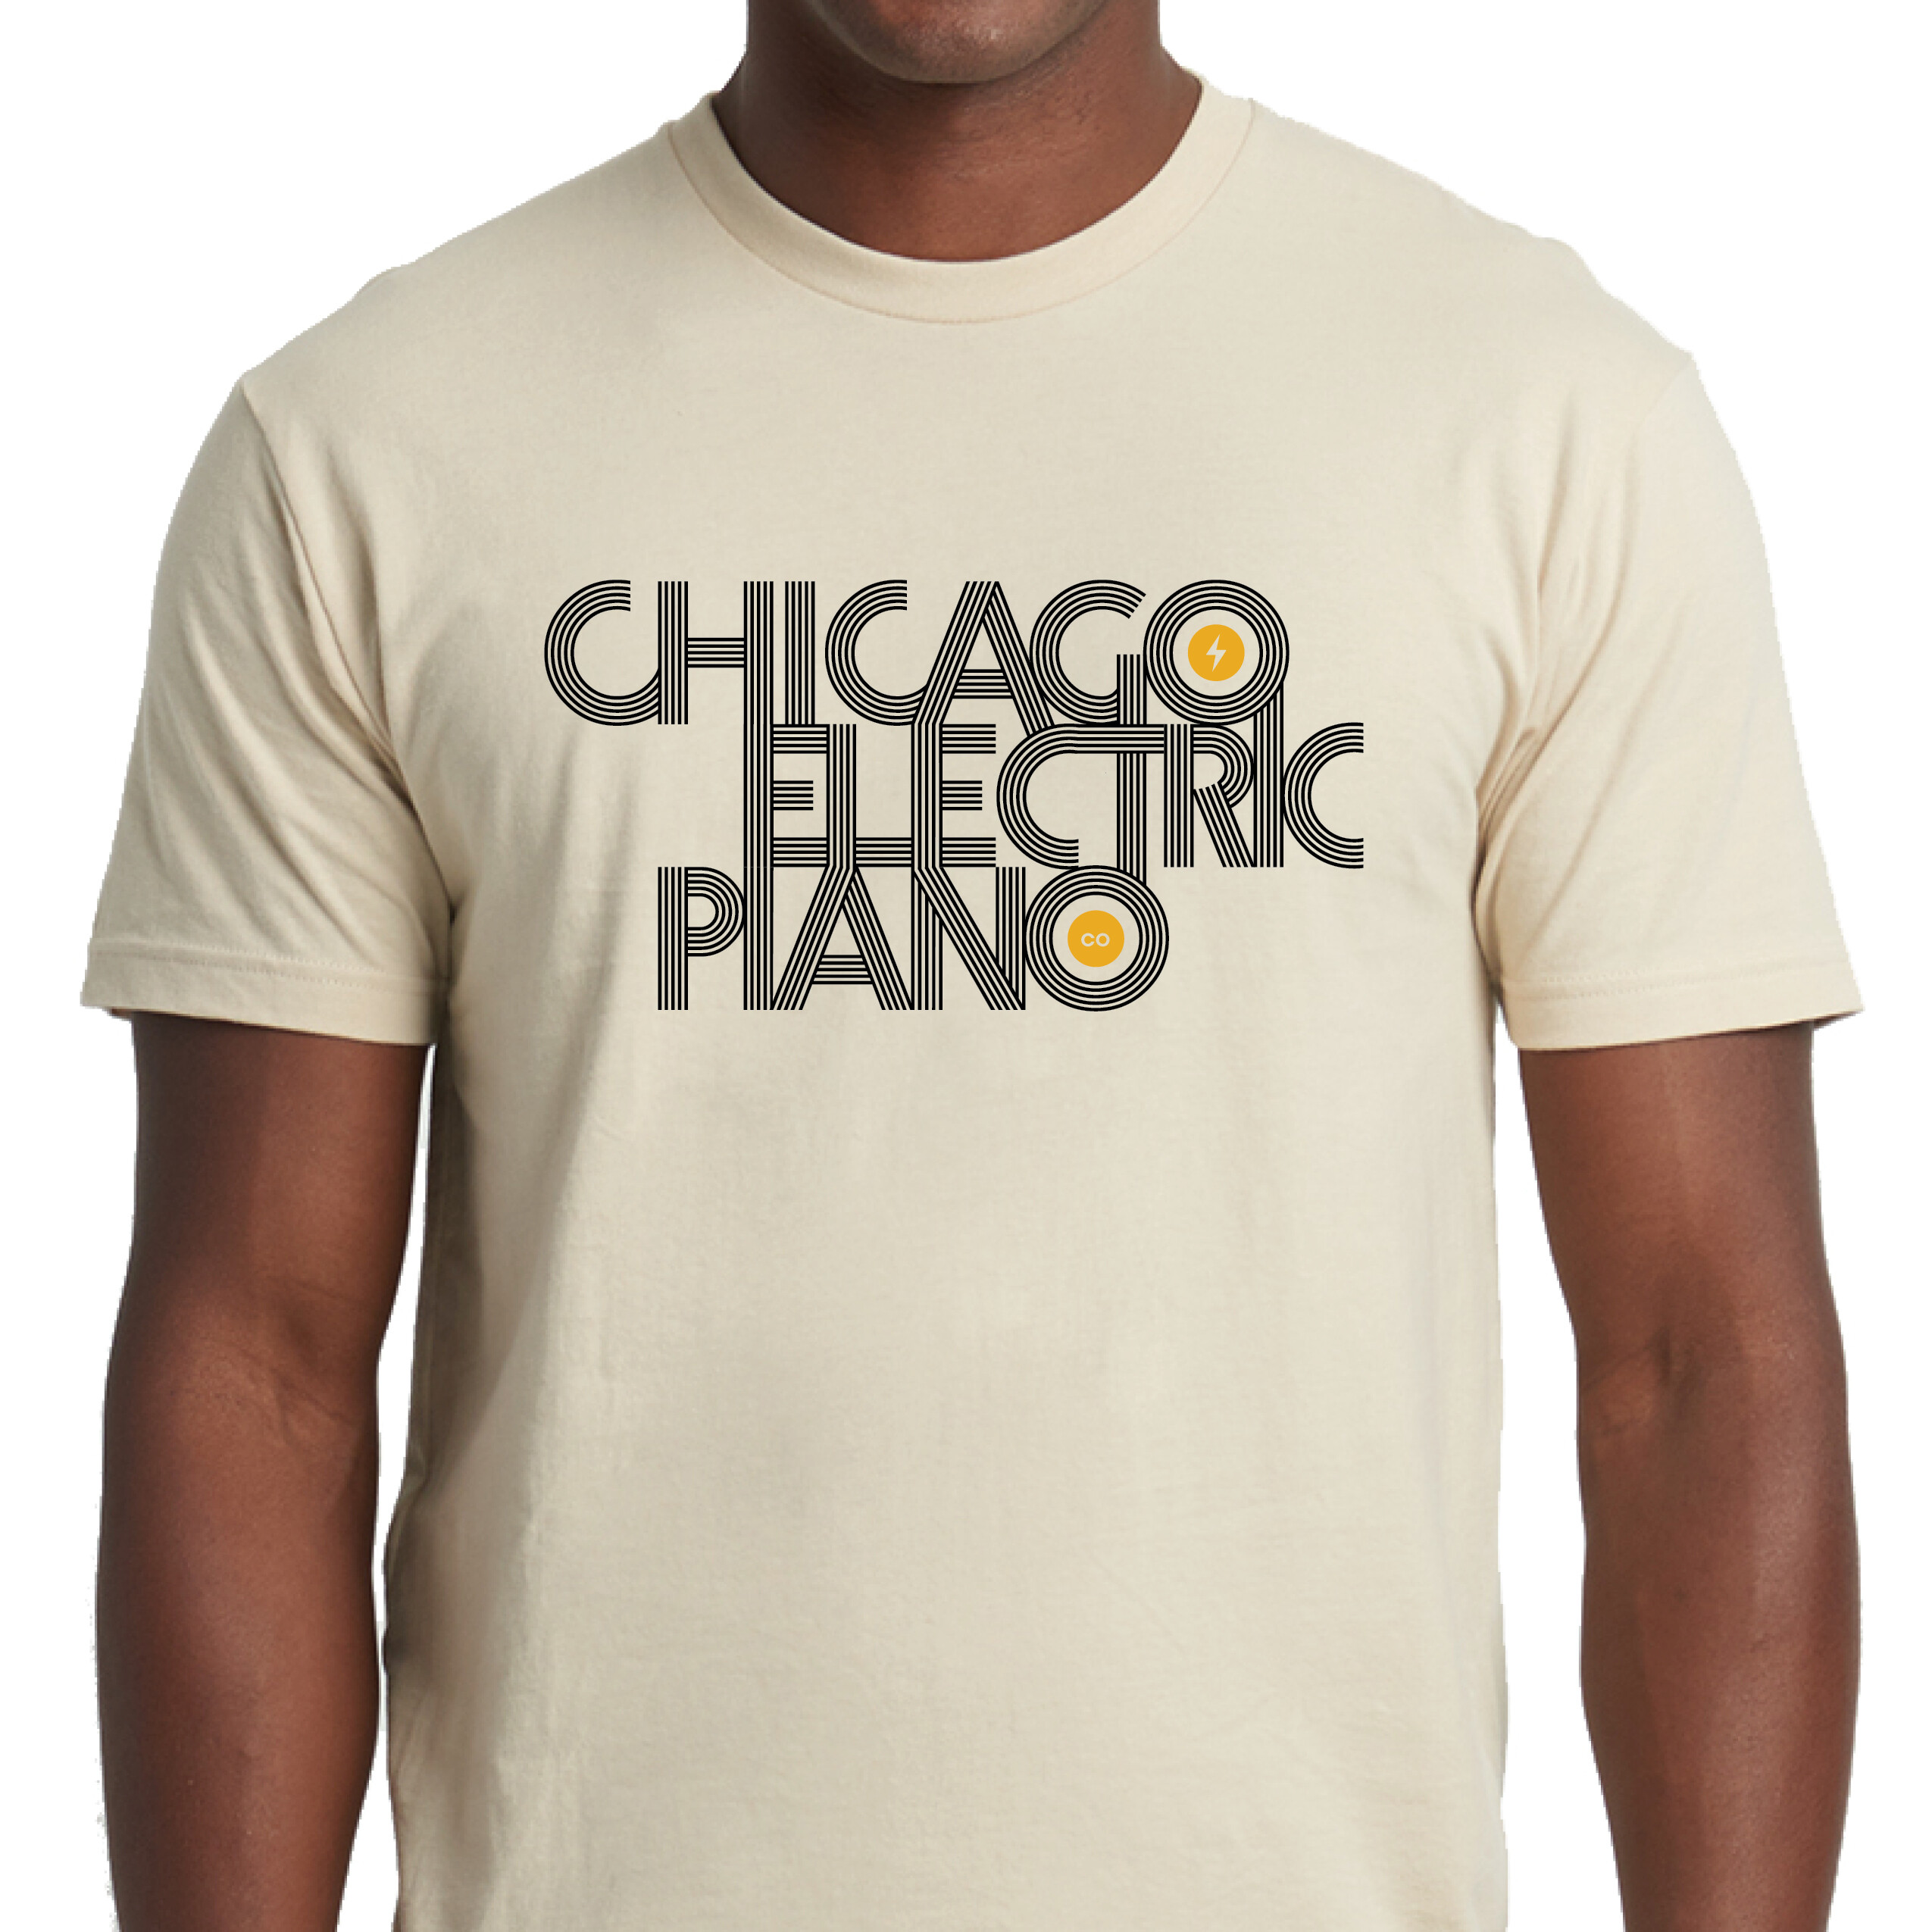 Prisma Tee - The Chicago Electric Piano Co.